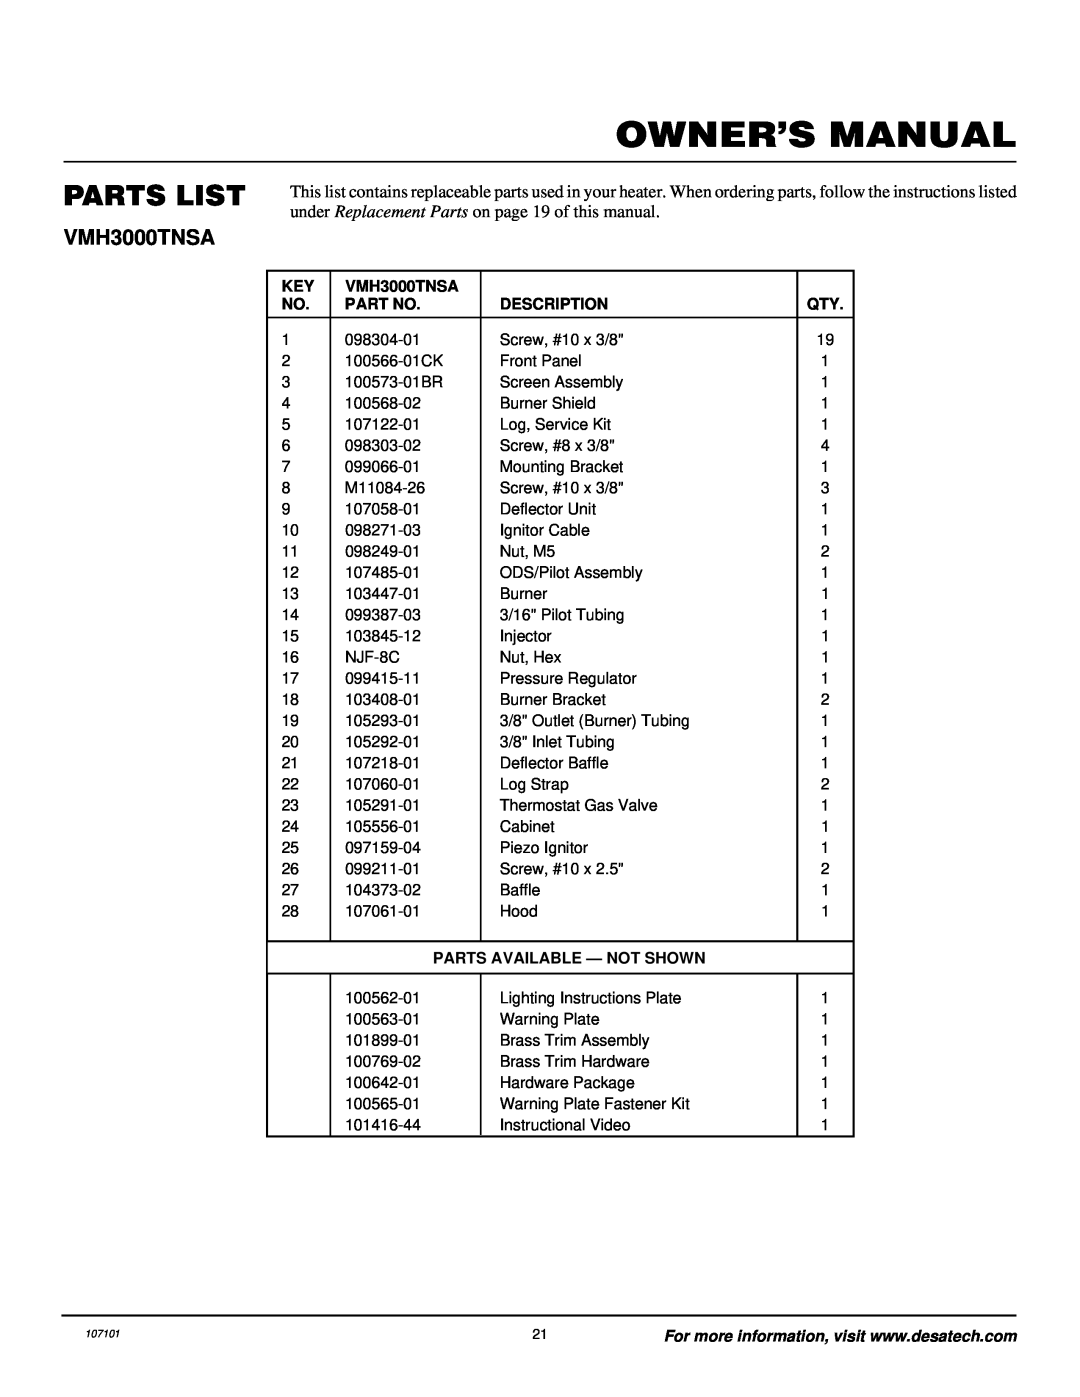 Vanguard Heating VMH3000TNSA installation manual Parts List, Description, Parts Available - Not Shown 